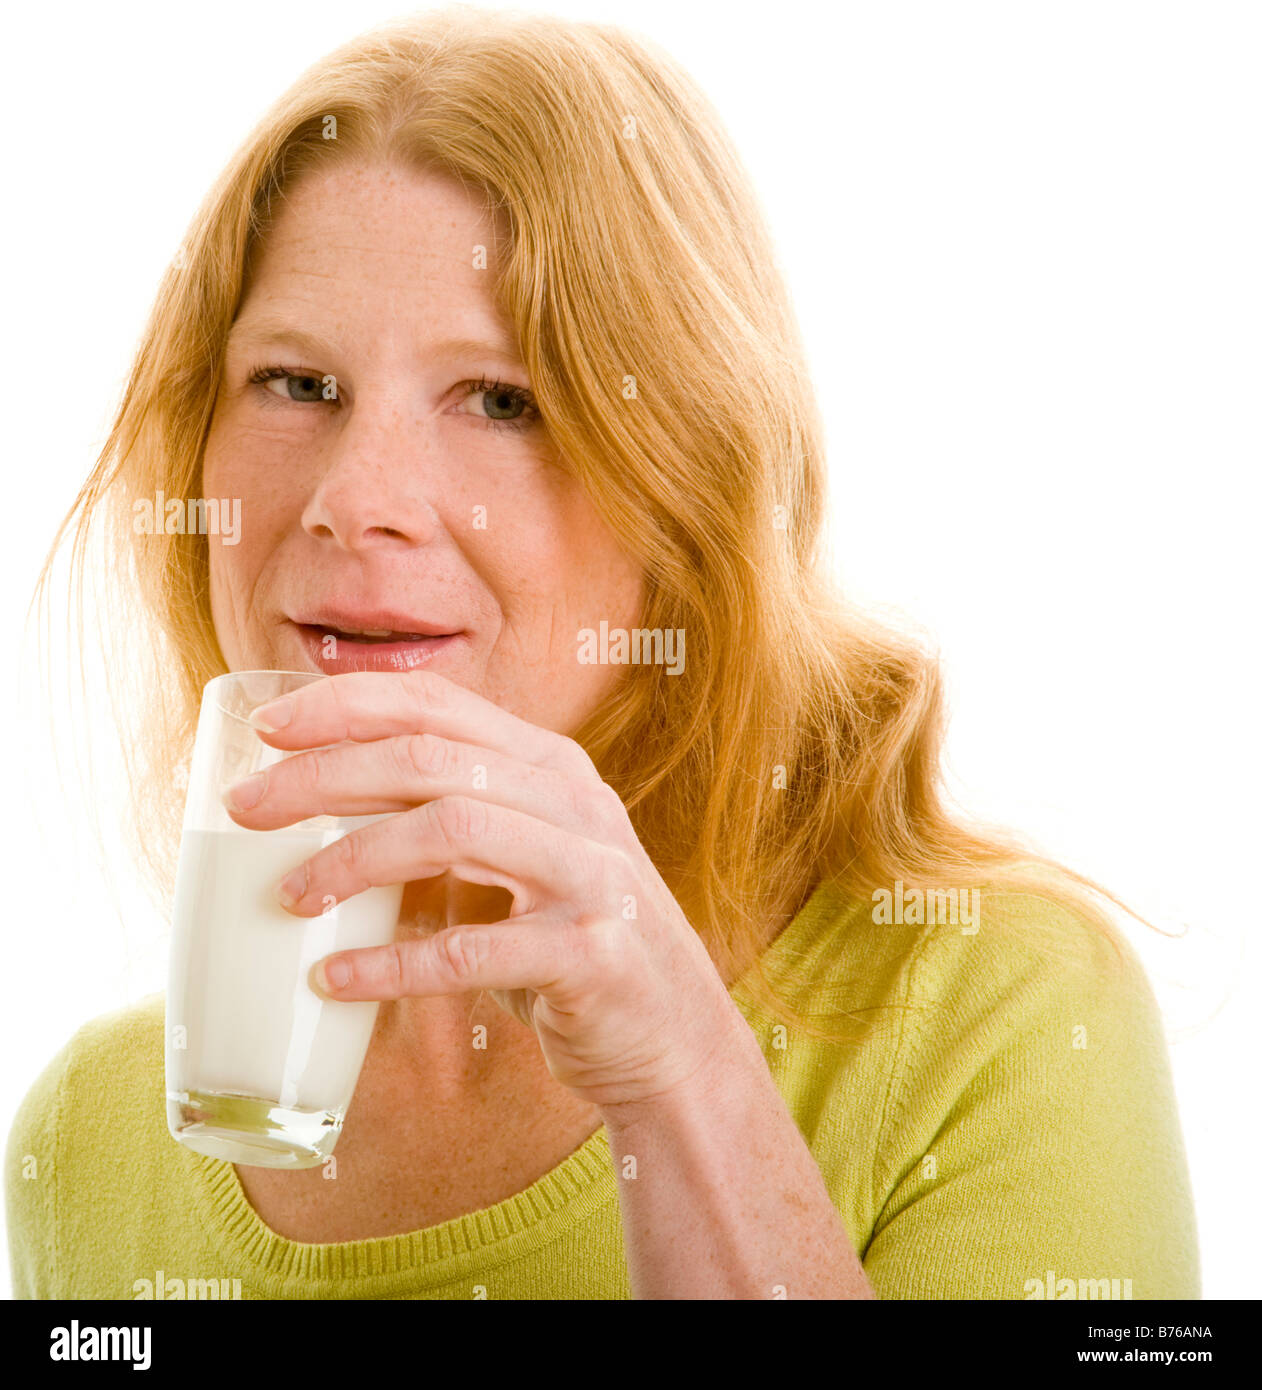 redhead woman drinking a glass of milk Stock Photo